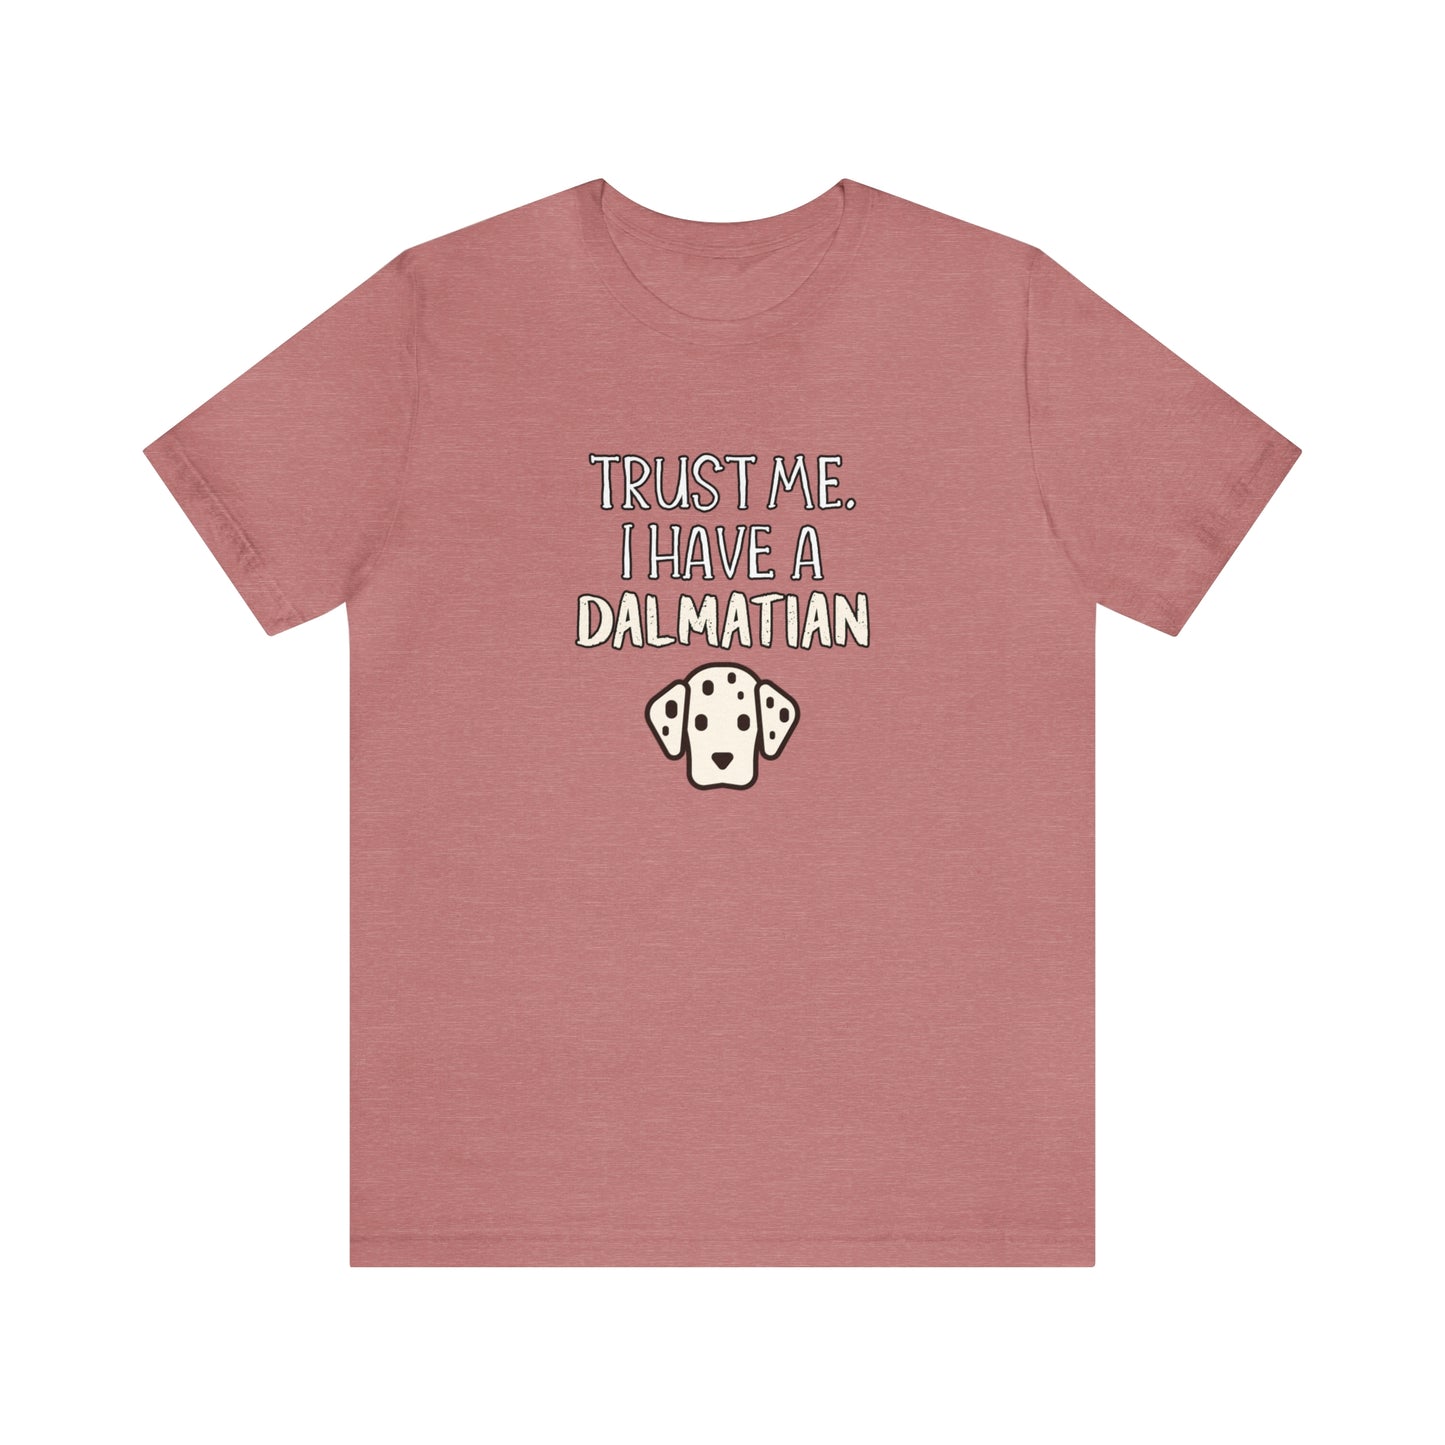 dalmatian funny t shirt pink